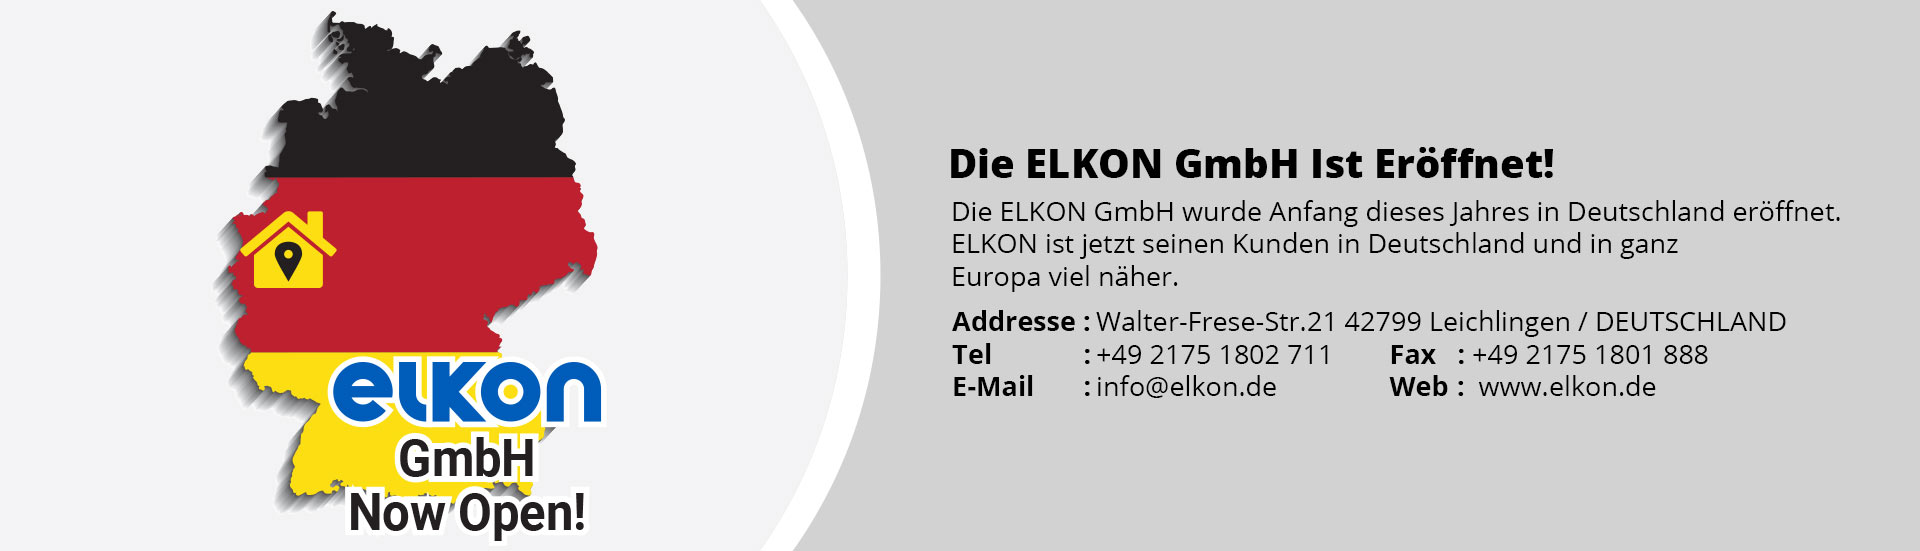 Die ELKON GmbH ist eröffnet!